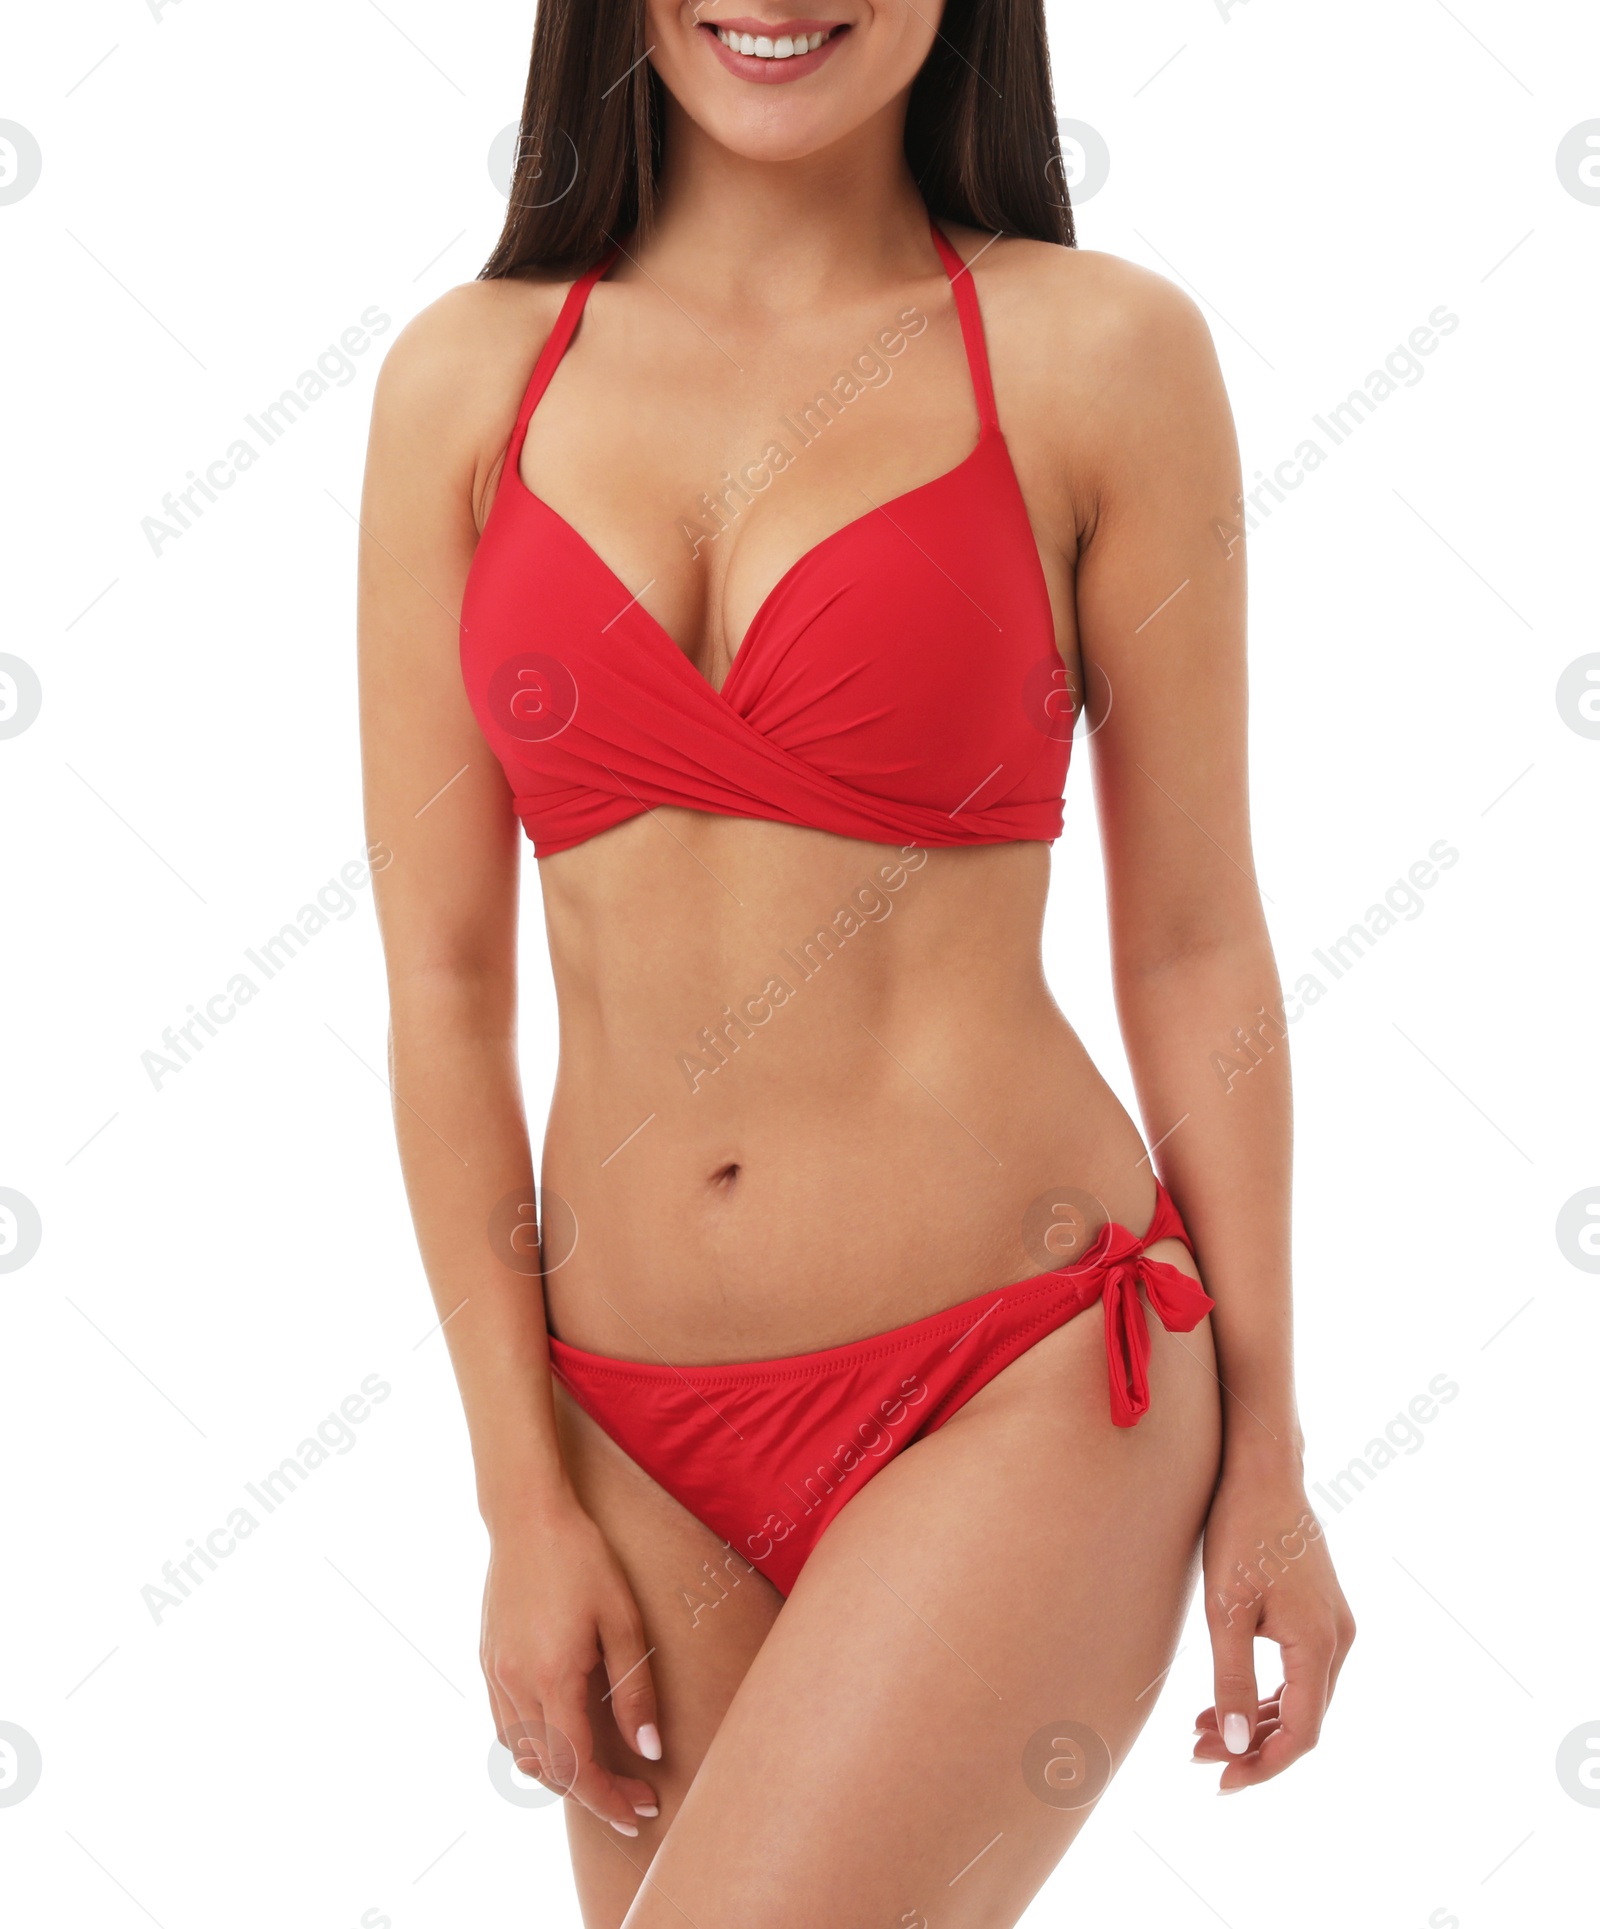 Photo of Pretty sexy woman with slim body in stylish  red bikini on white background, closeup view